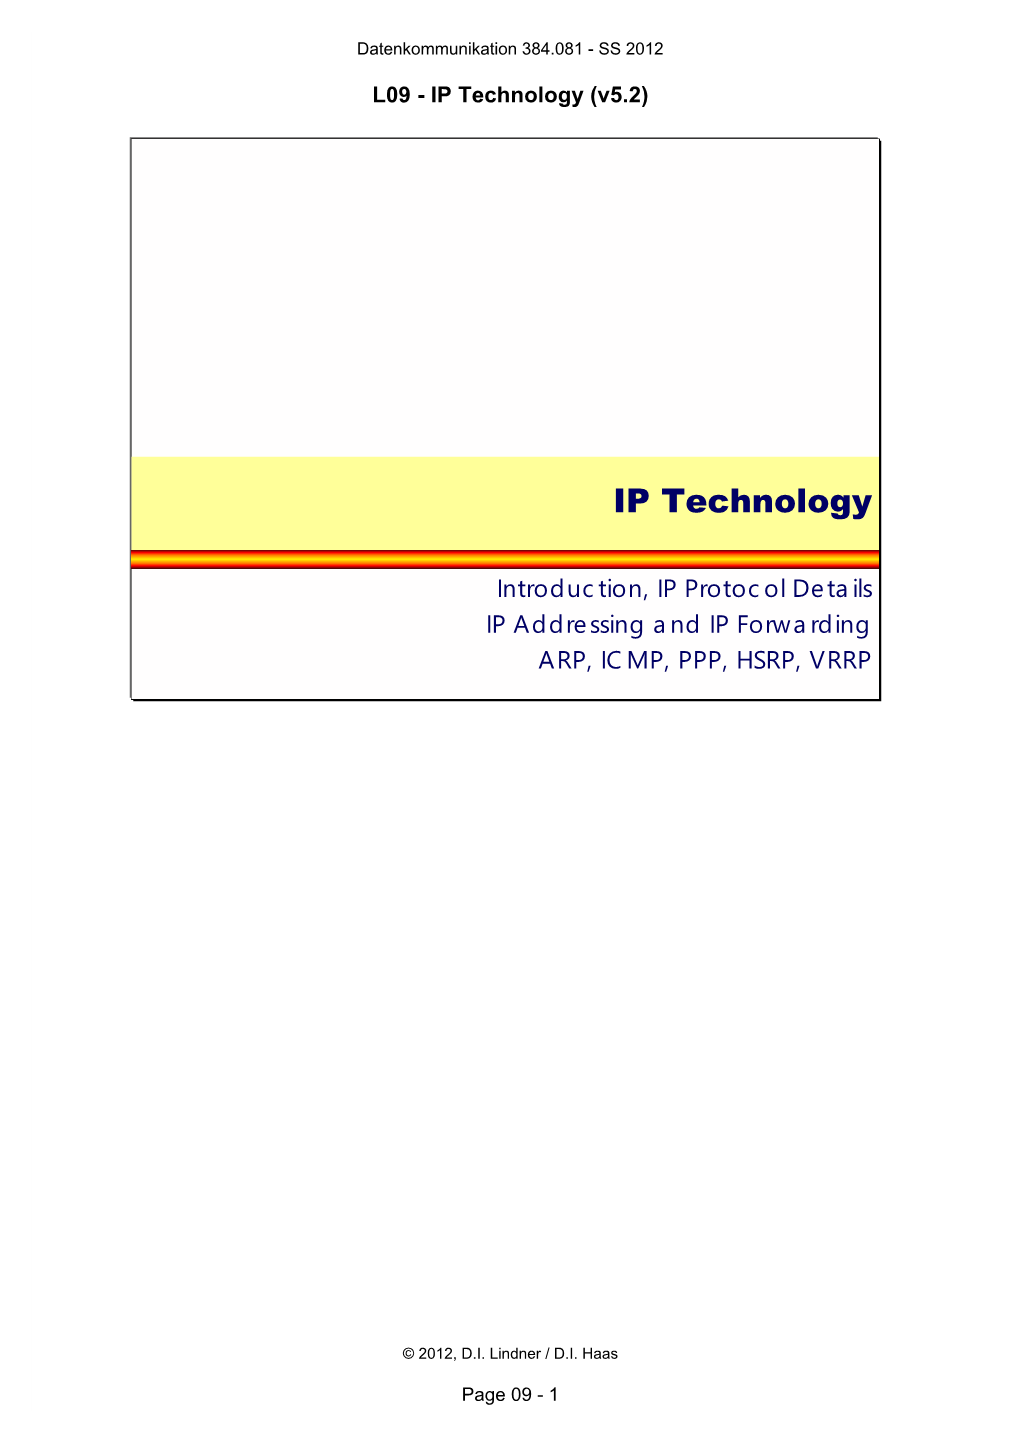 IP Technology (V5.2)